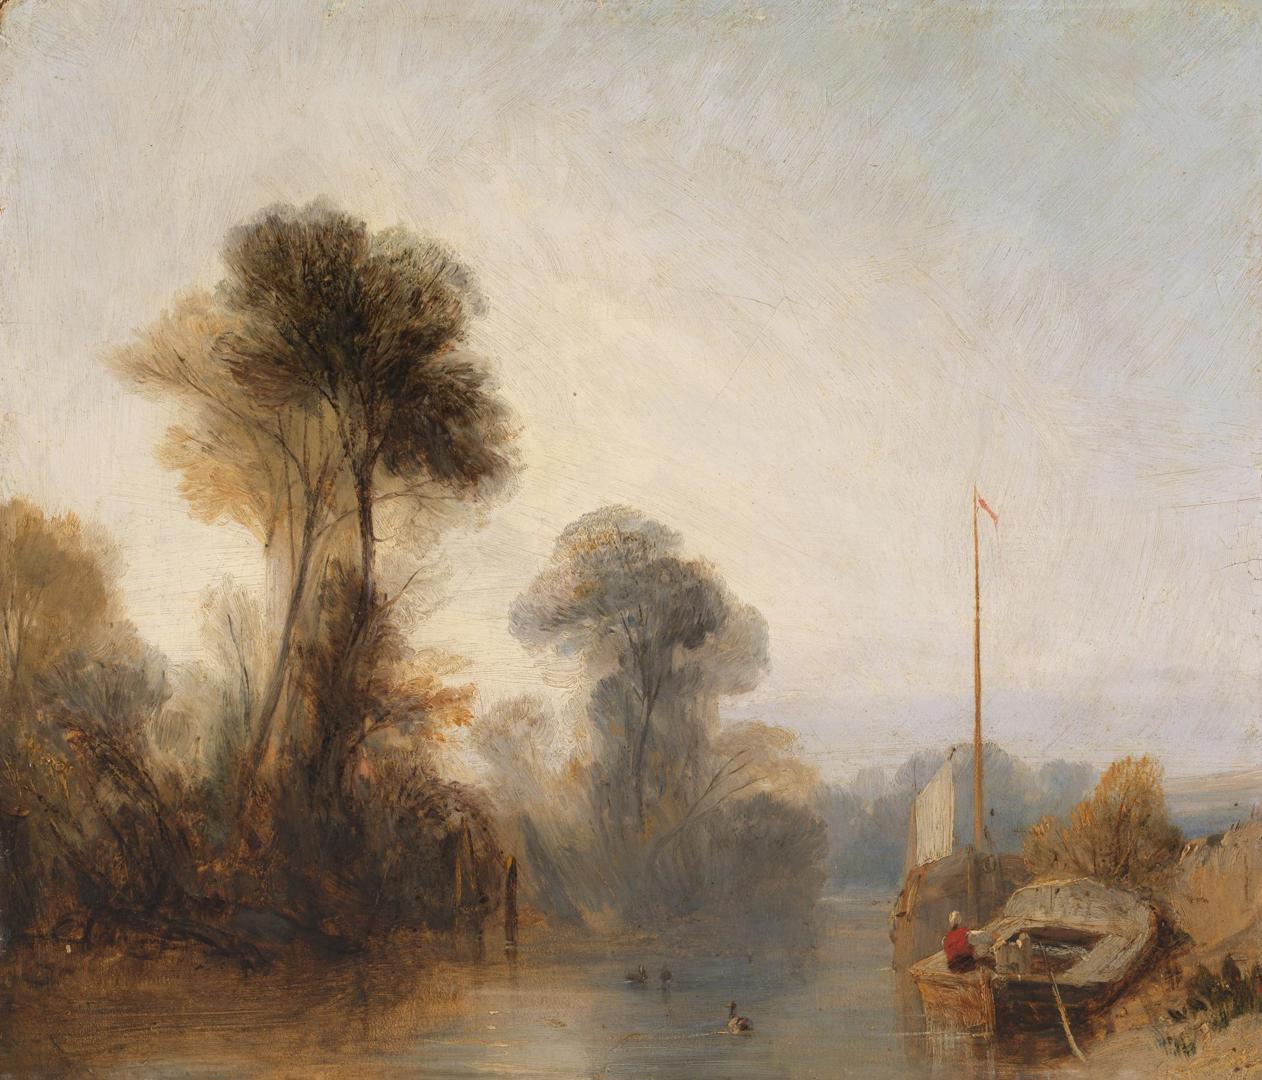 On the Seine – Morning by Richard Parkes Bonington